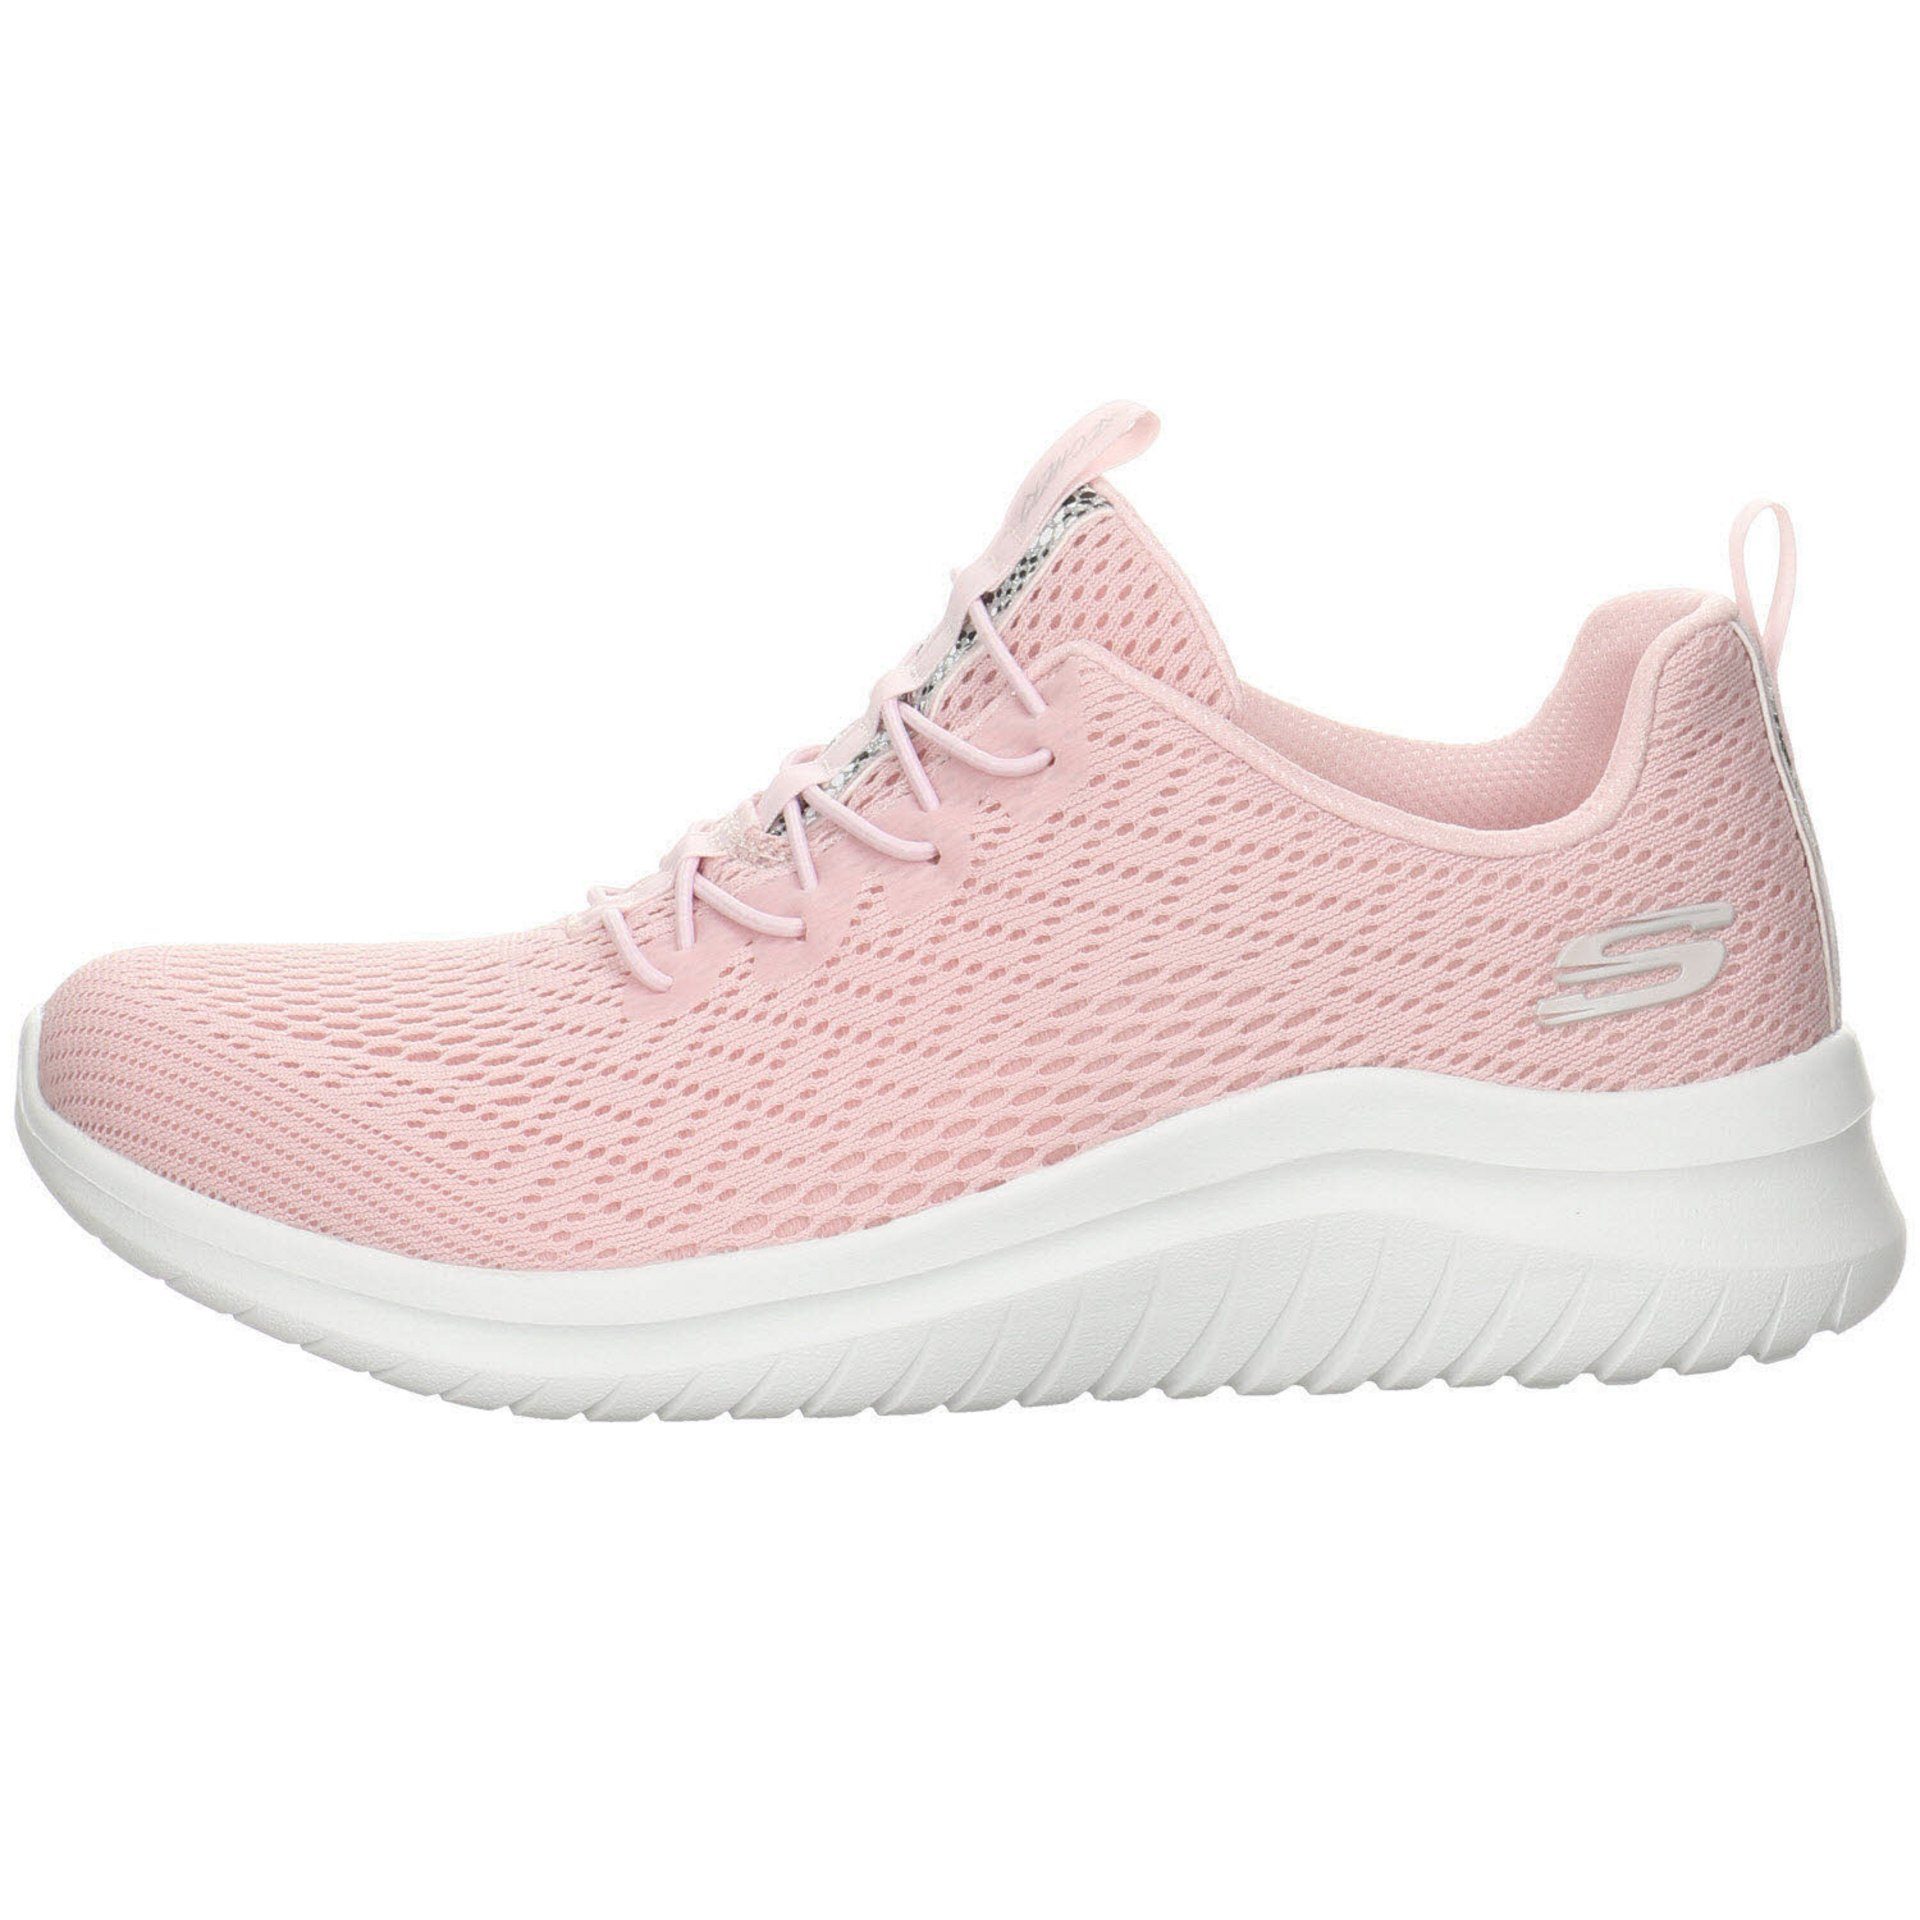 Schuhe Skechers Damen Sneaker Ultra lt.pink/white Sneaker Sneaker Flex Textil 2.0